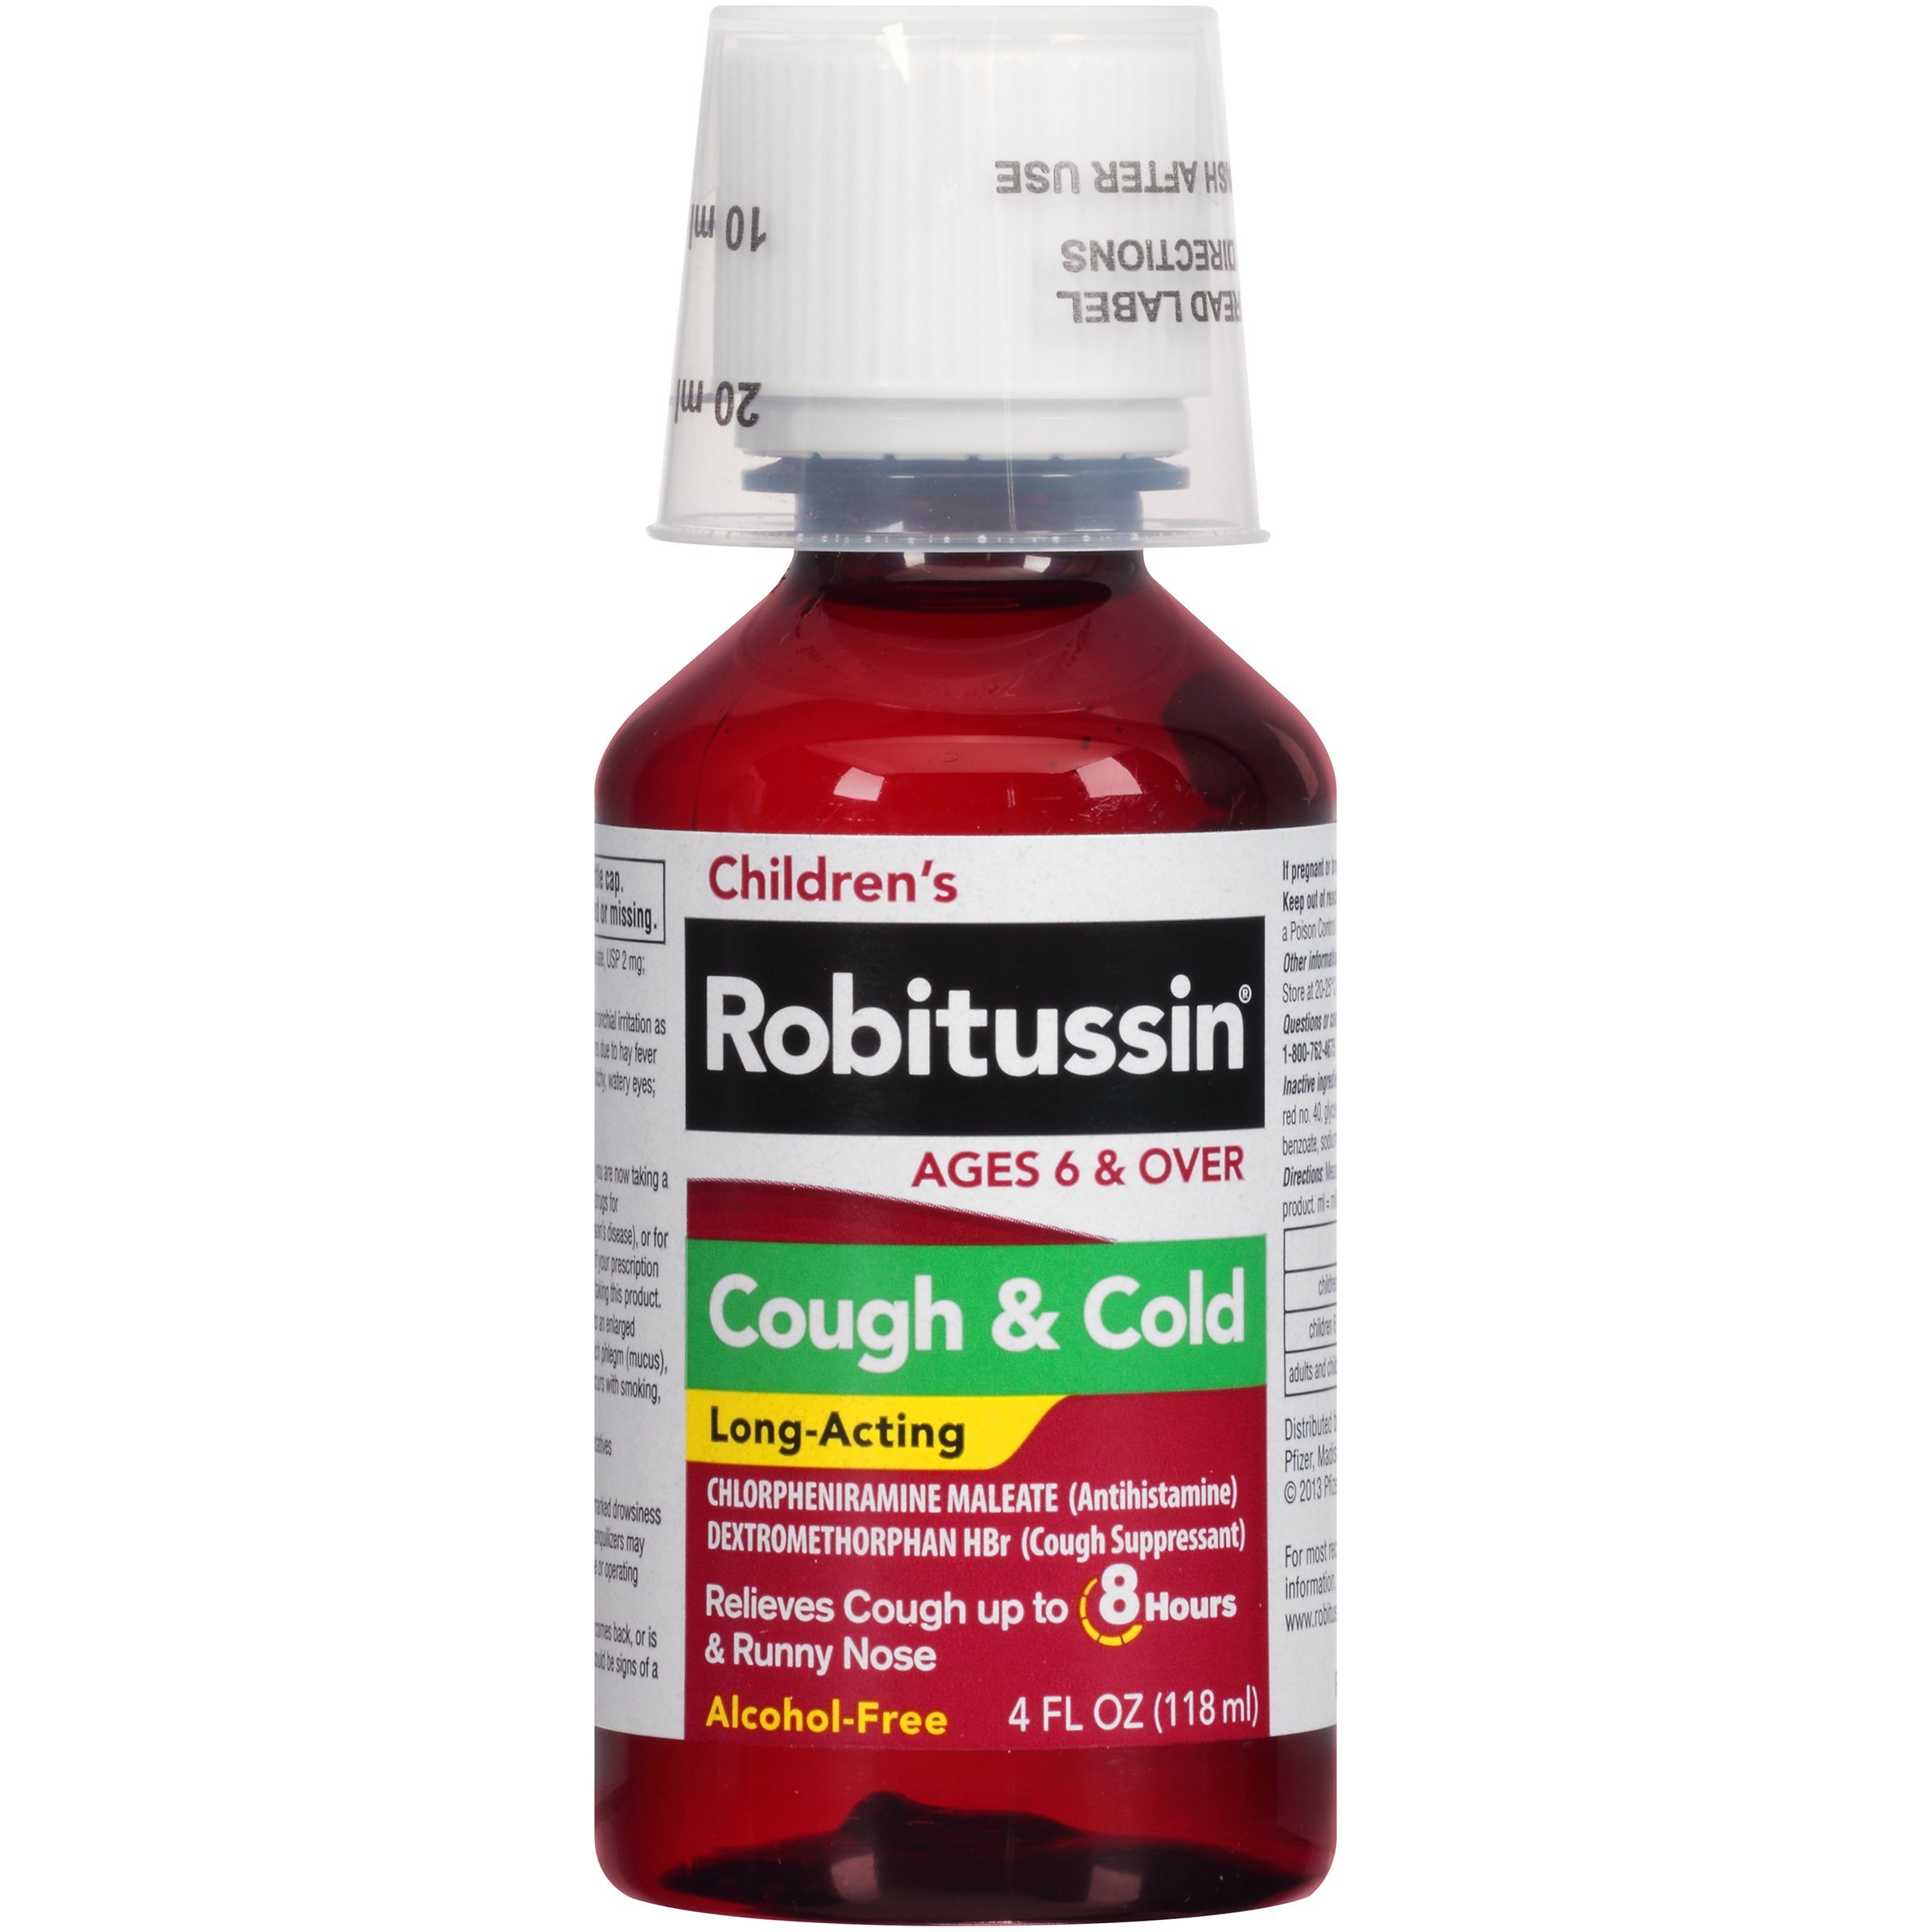 Robitussin Children's Long-Acting Cough and Cold Medicine for Kids, Fruit Punch Flavor - 4 Fl Oz Bottle (Pack of 3)